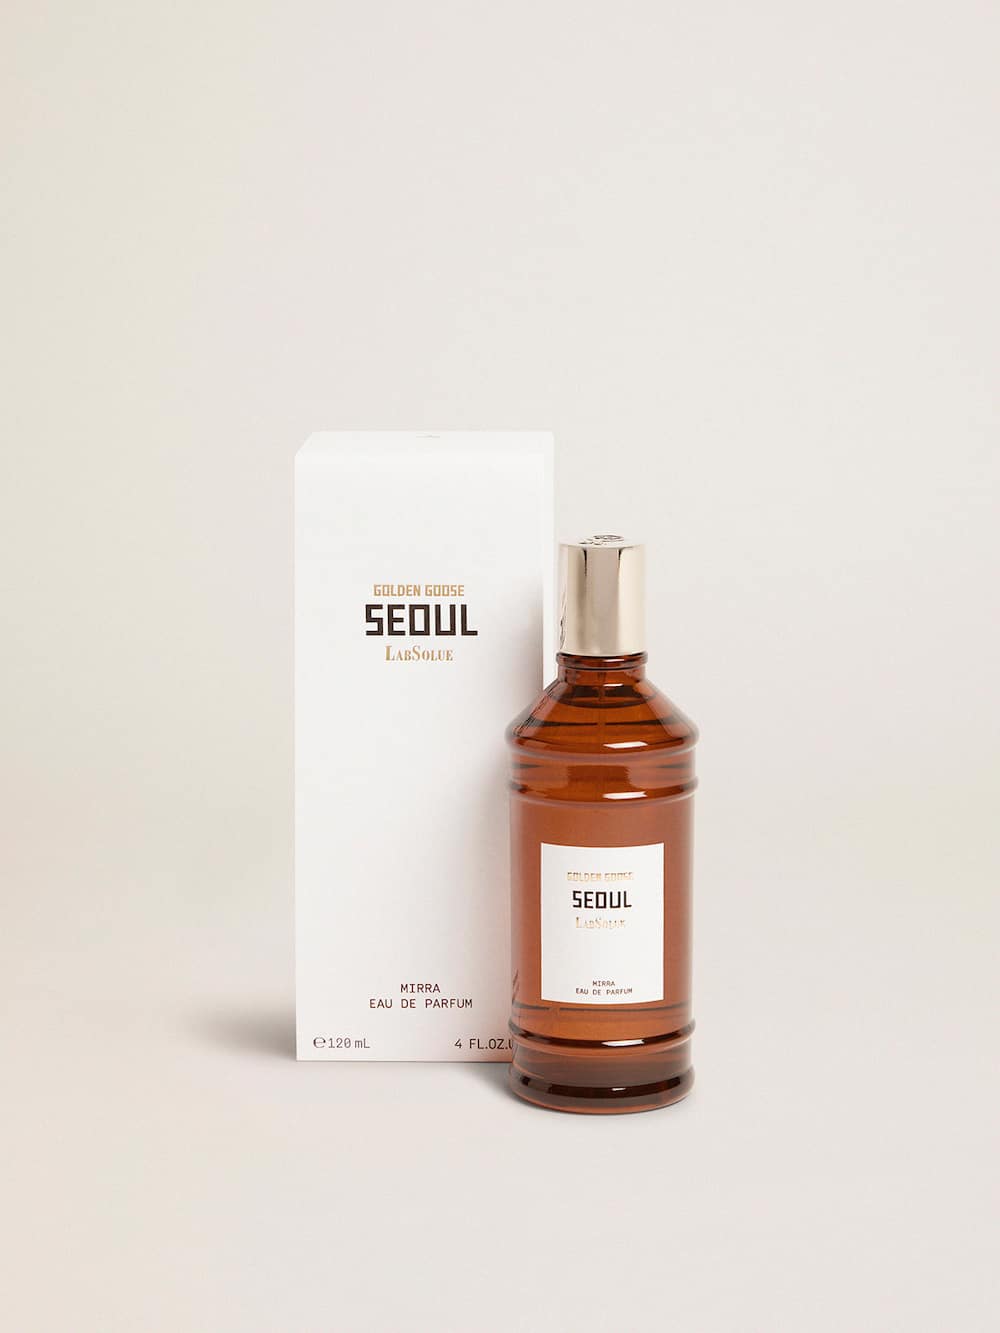 Golden Goose - Seoul Essence Mirra Eau de Parfum 120 ml in 